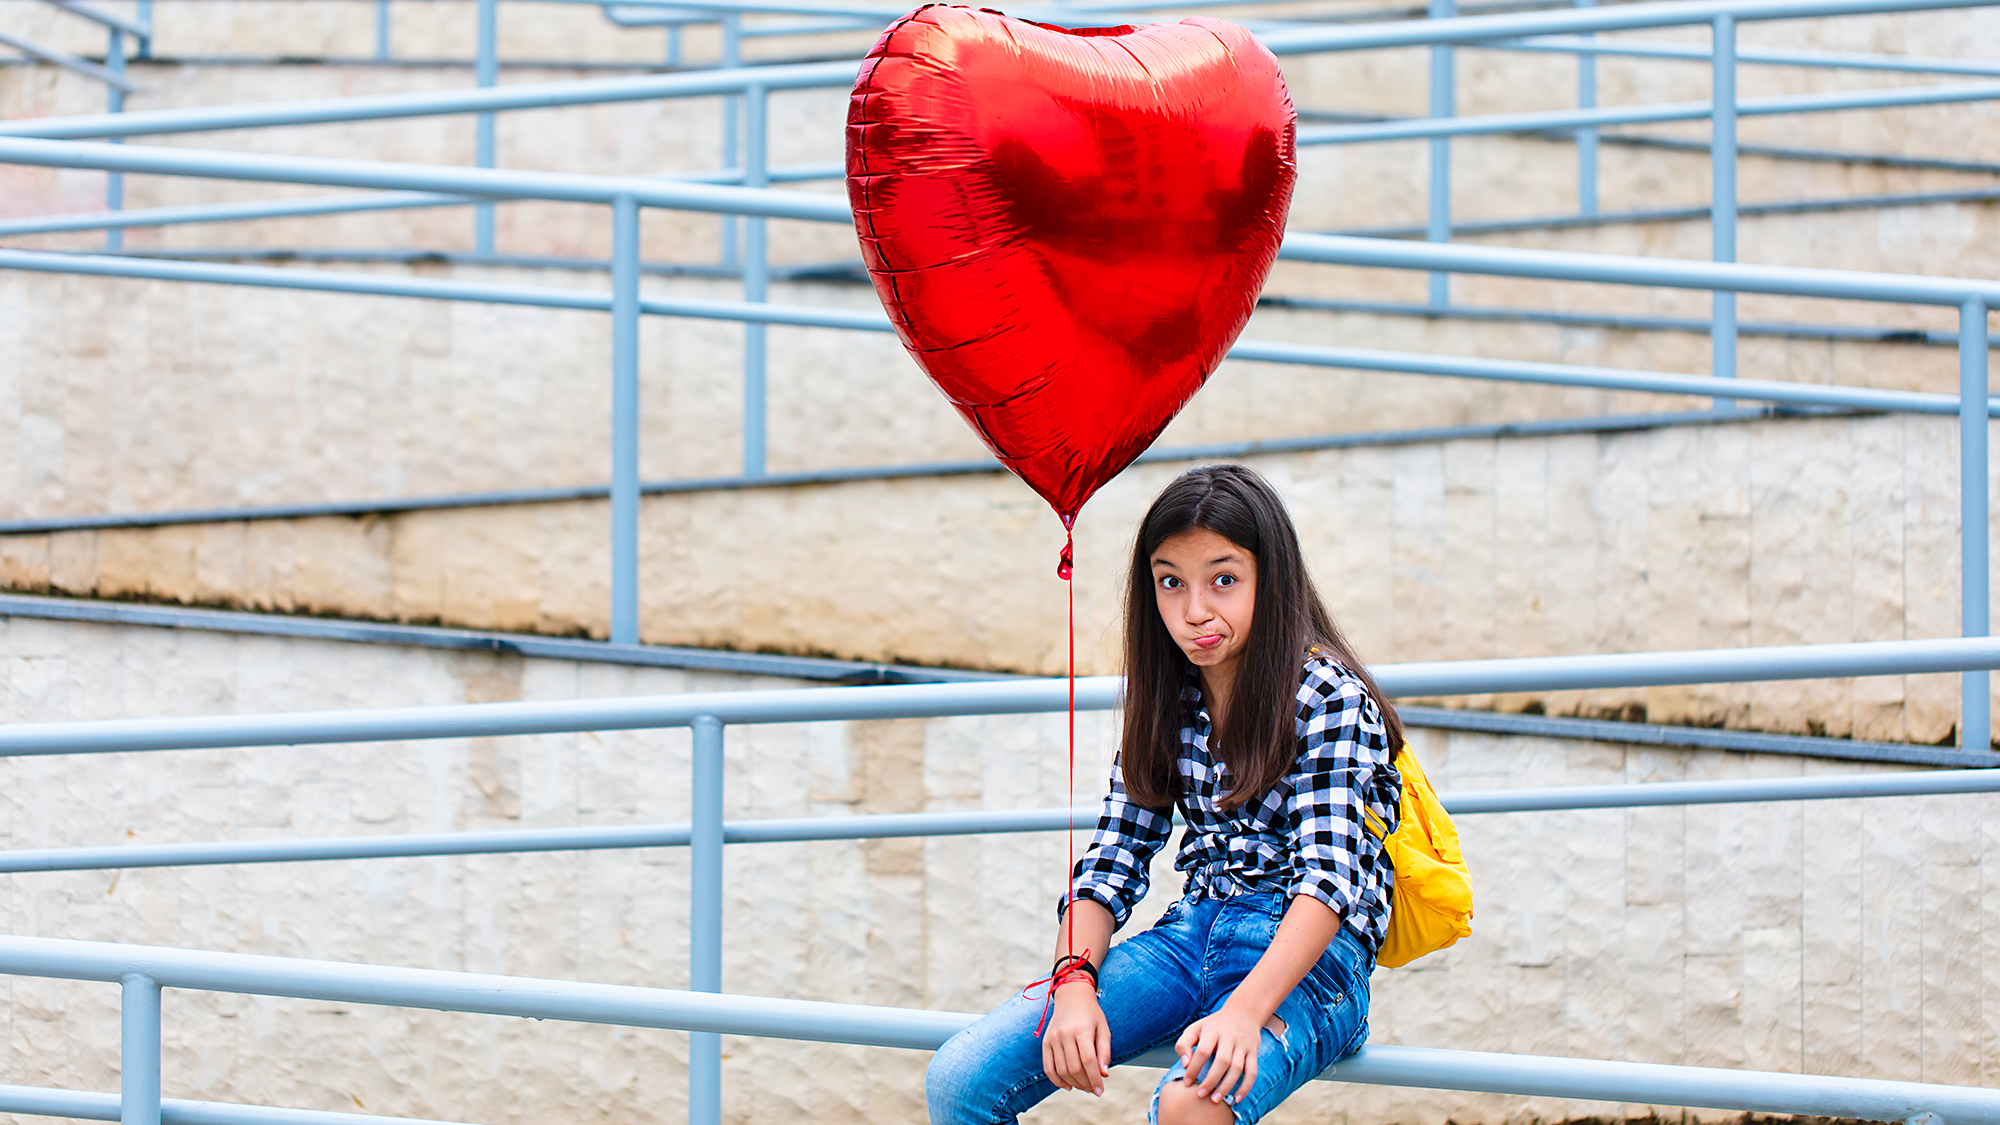 Mädchen auf Baustelle hält Herz-Luftballon